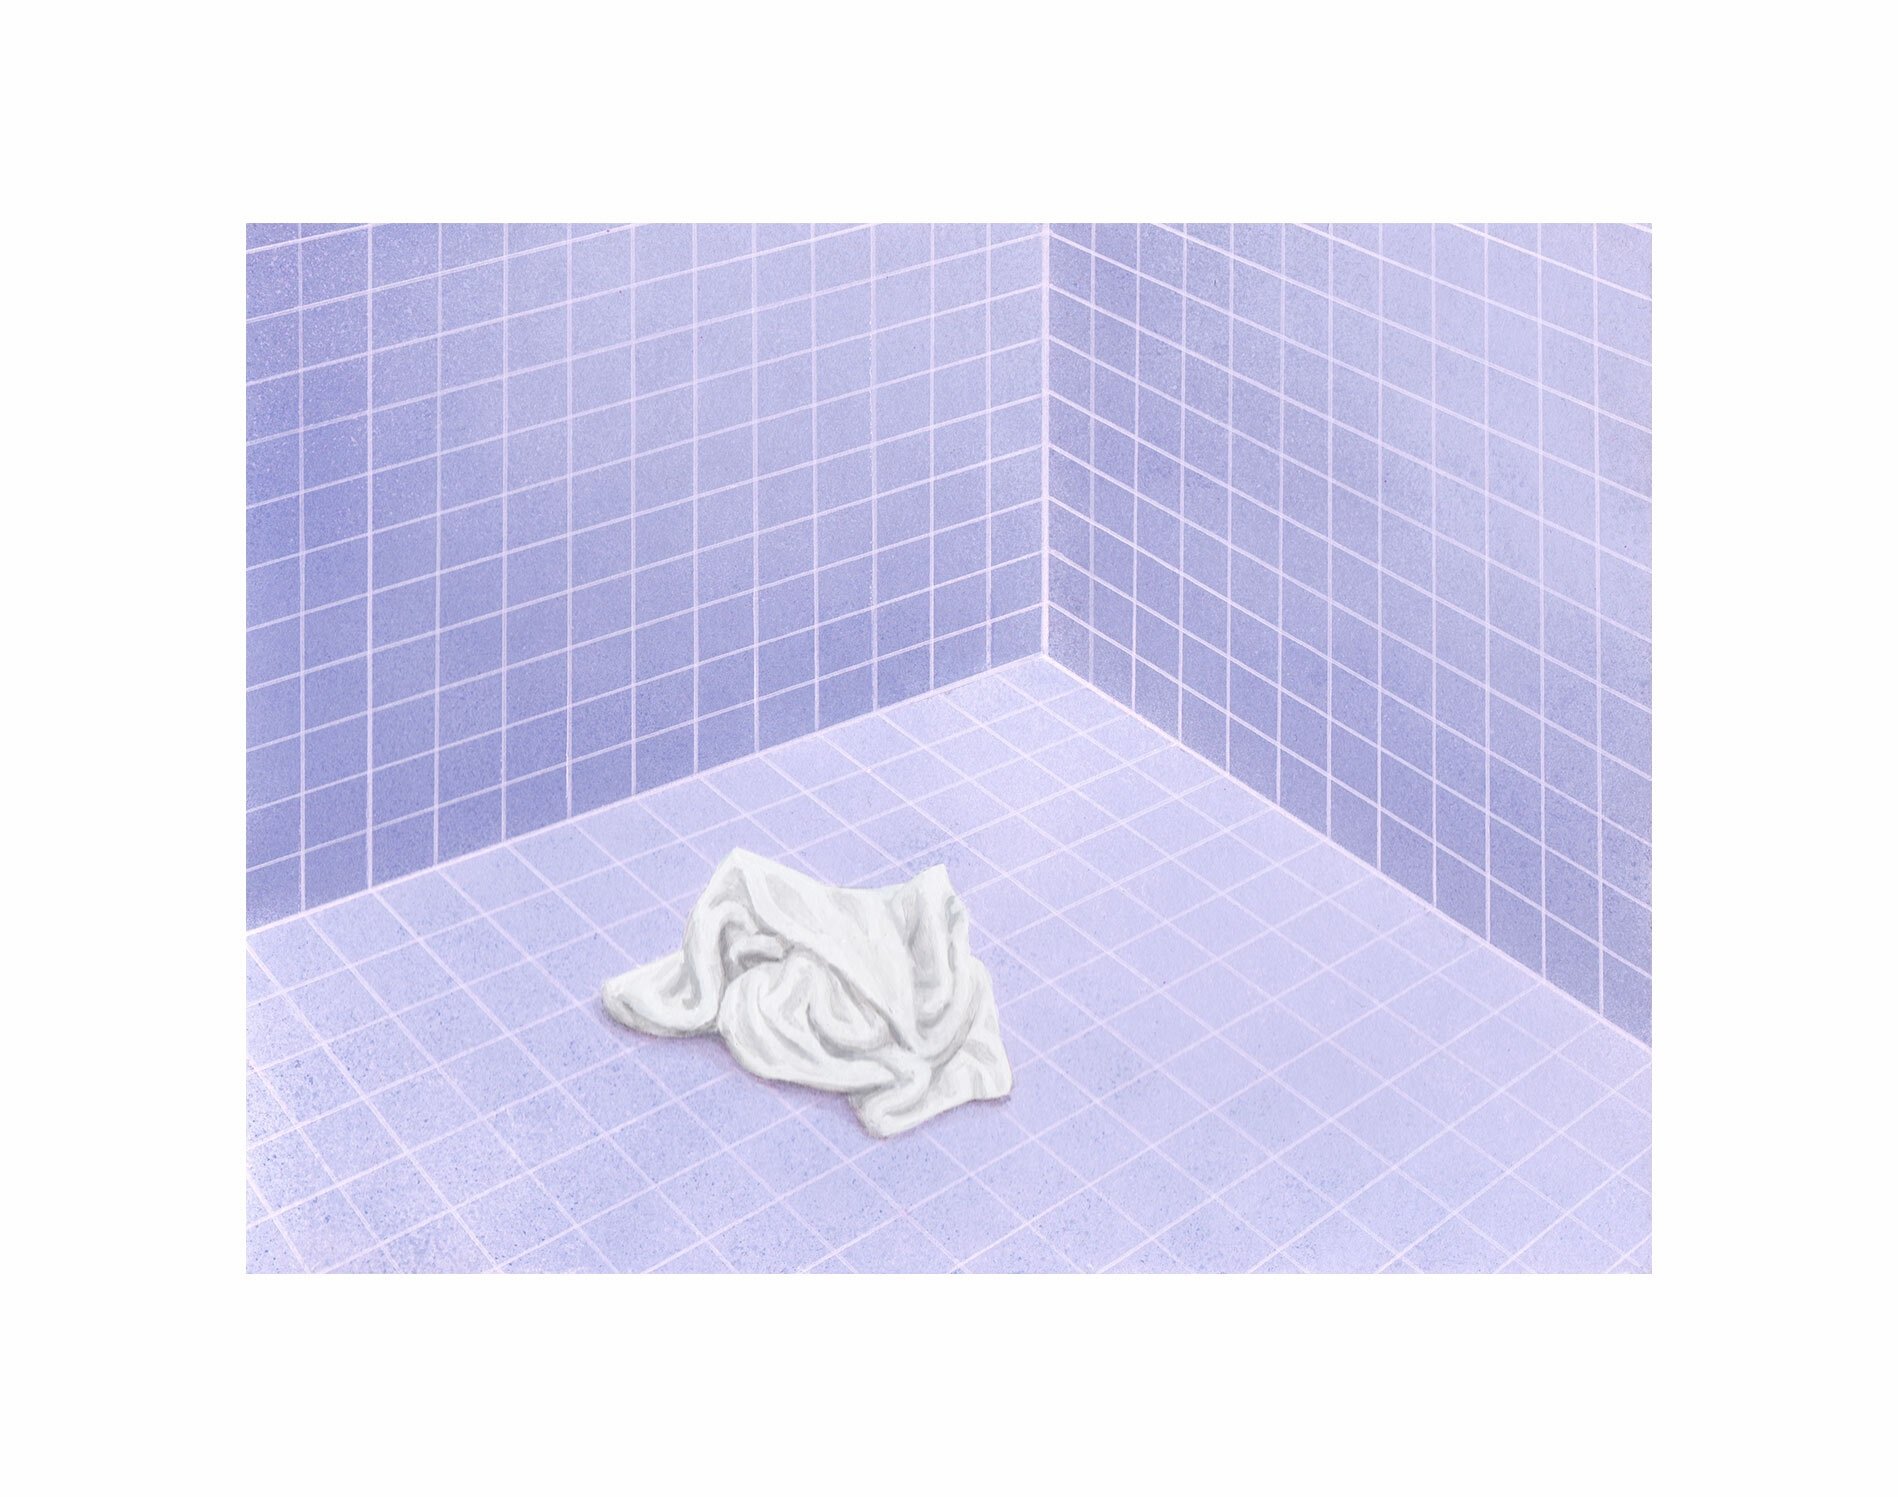 Towel II